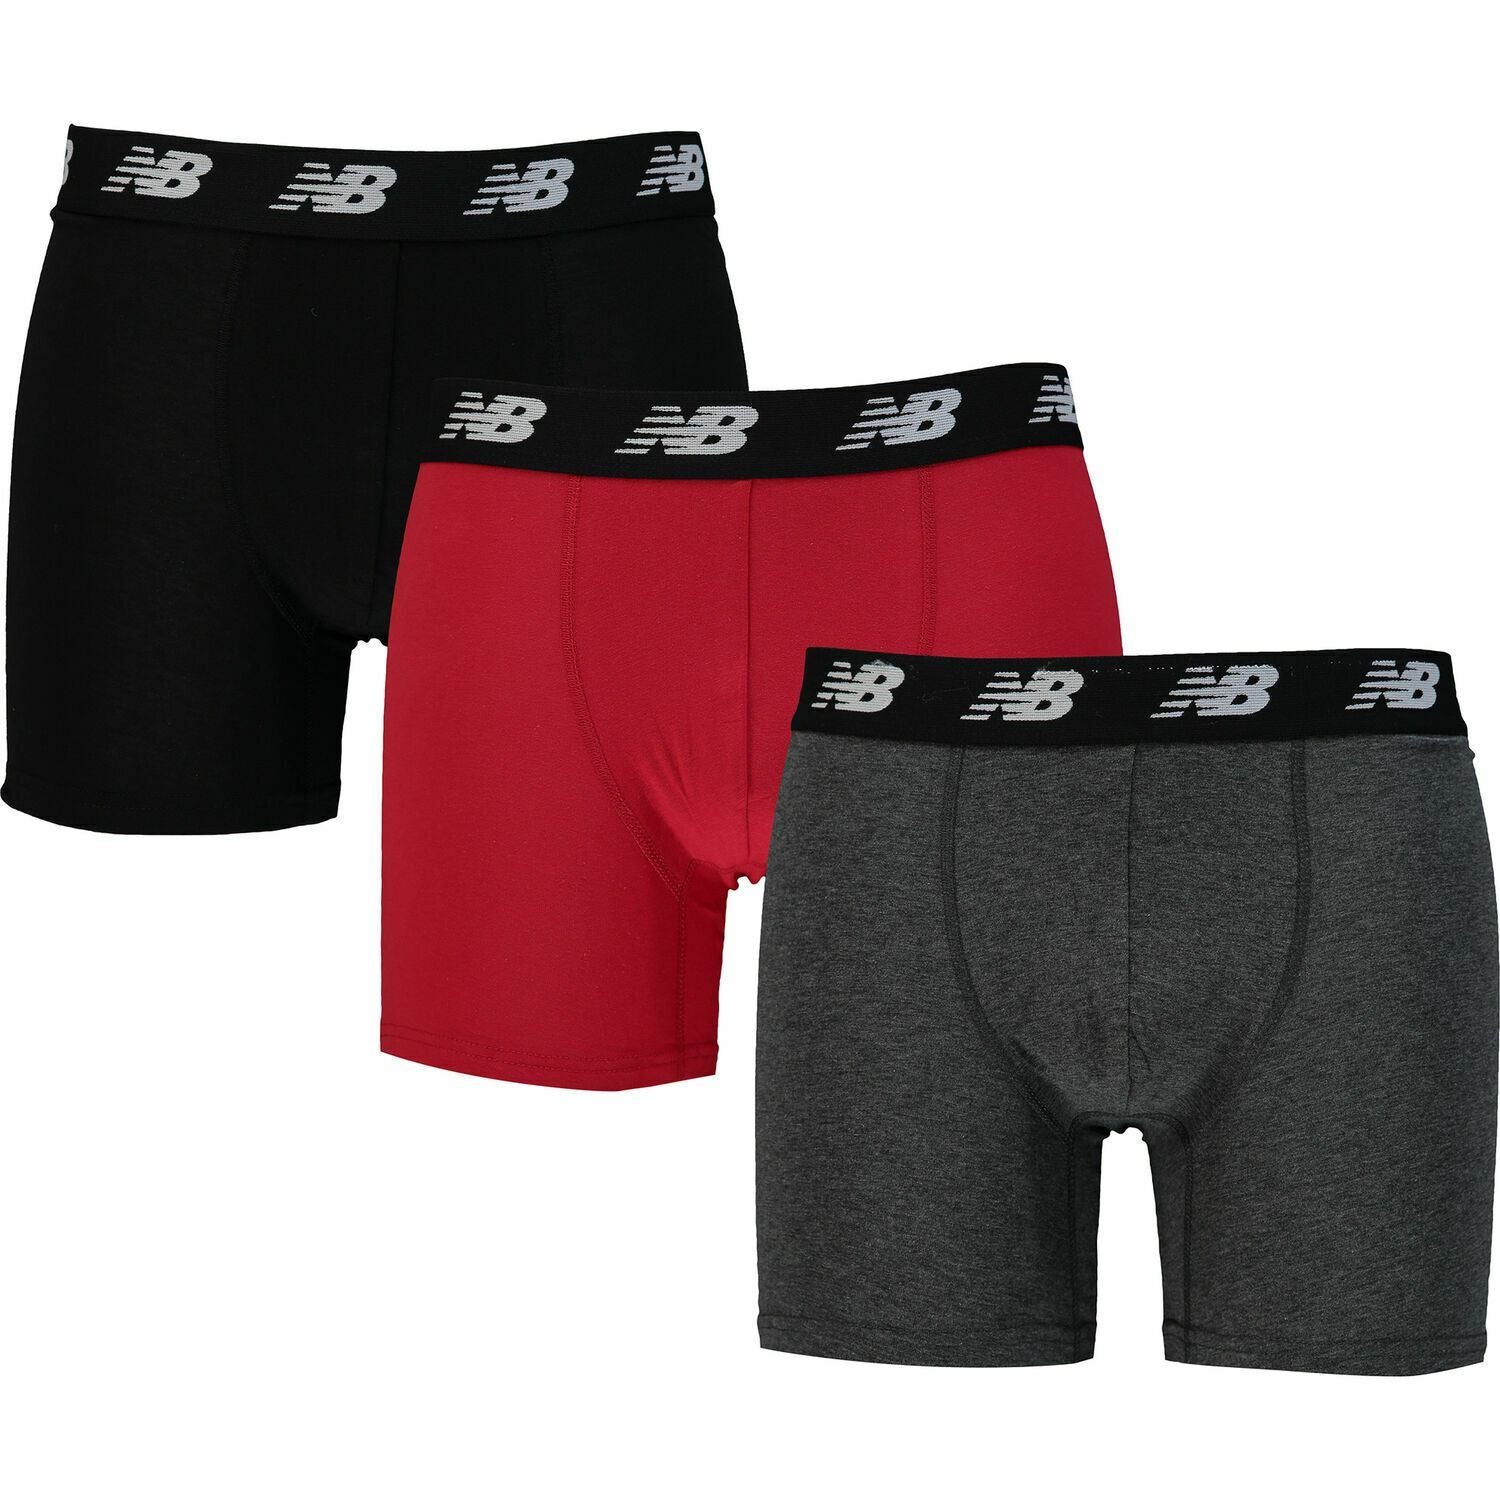 New Balance Mens 3-Pk Cotton Performance Boxers, Red/Grey/Black size S (28"-30")